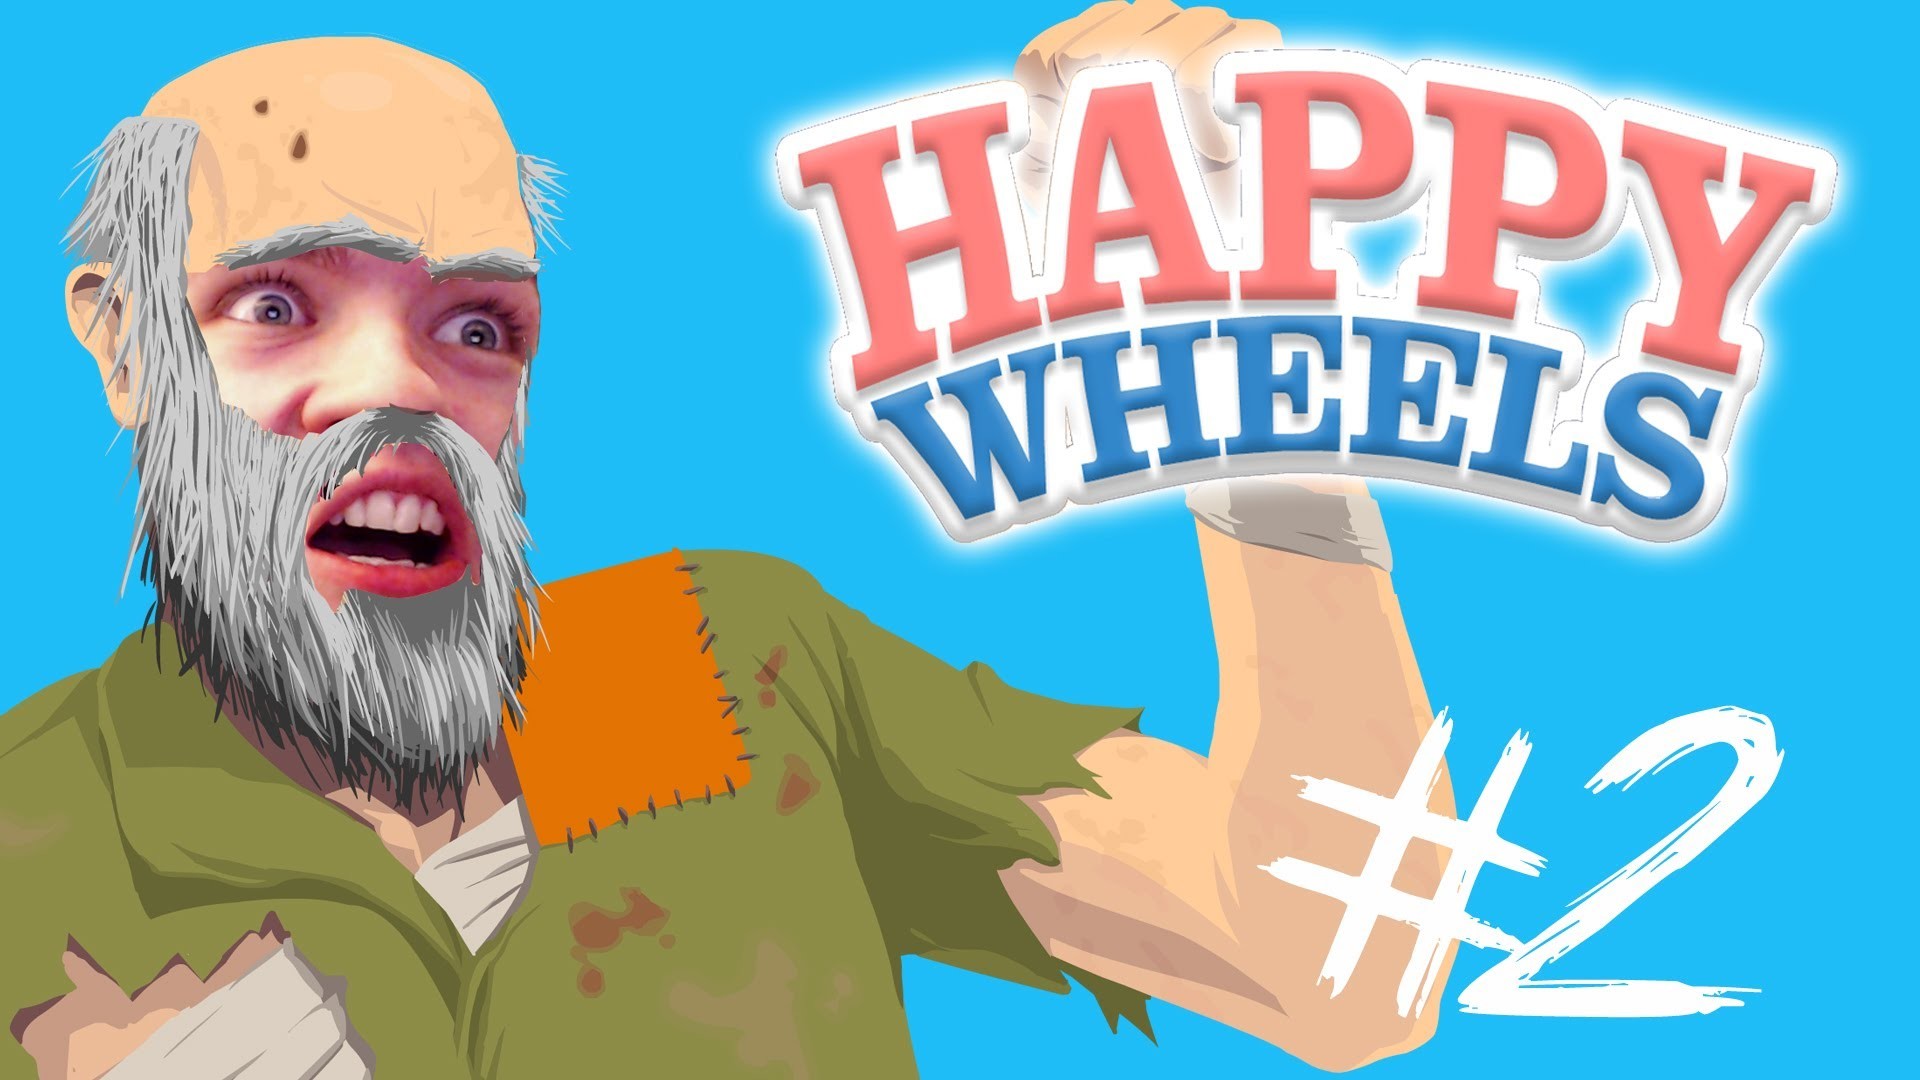 happy wheels full version download free